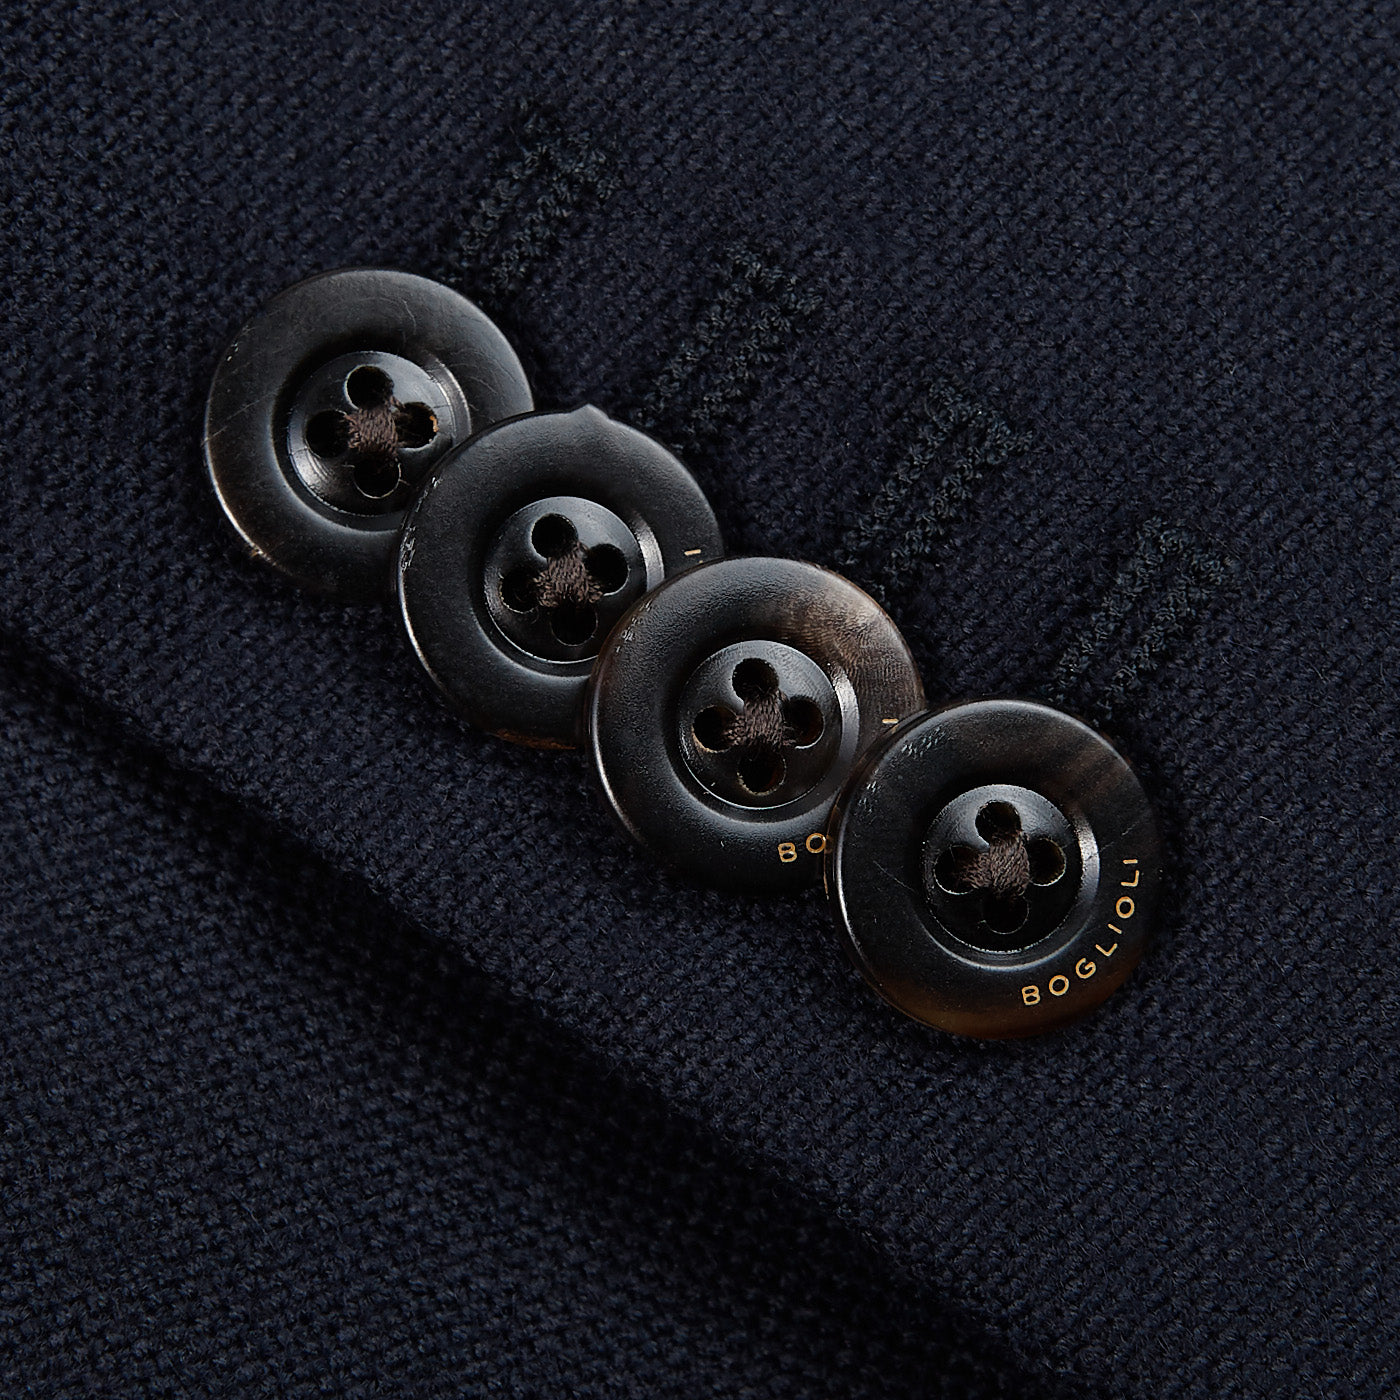 Boglioli Navy Blue Virgin Wool K Jacket Button